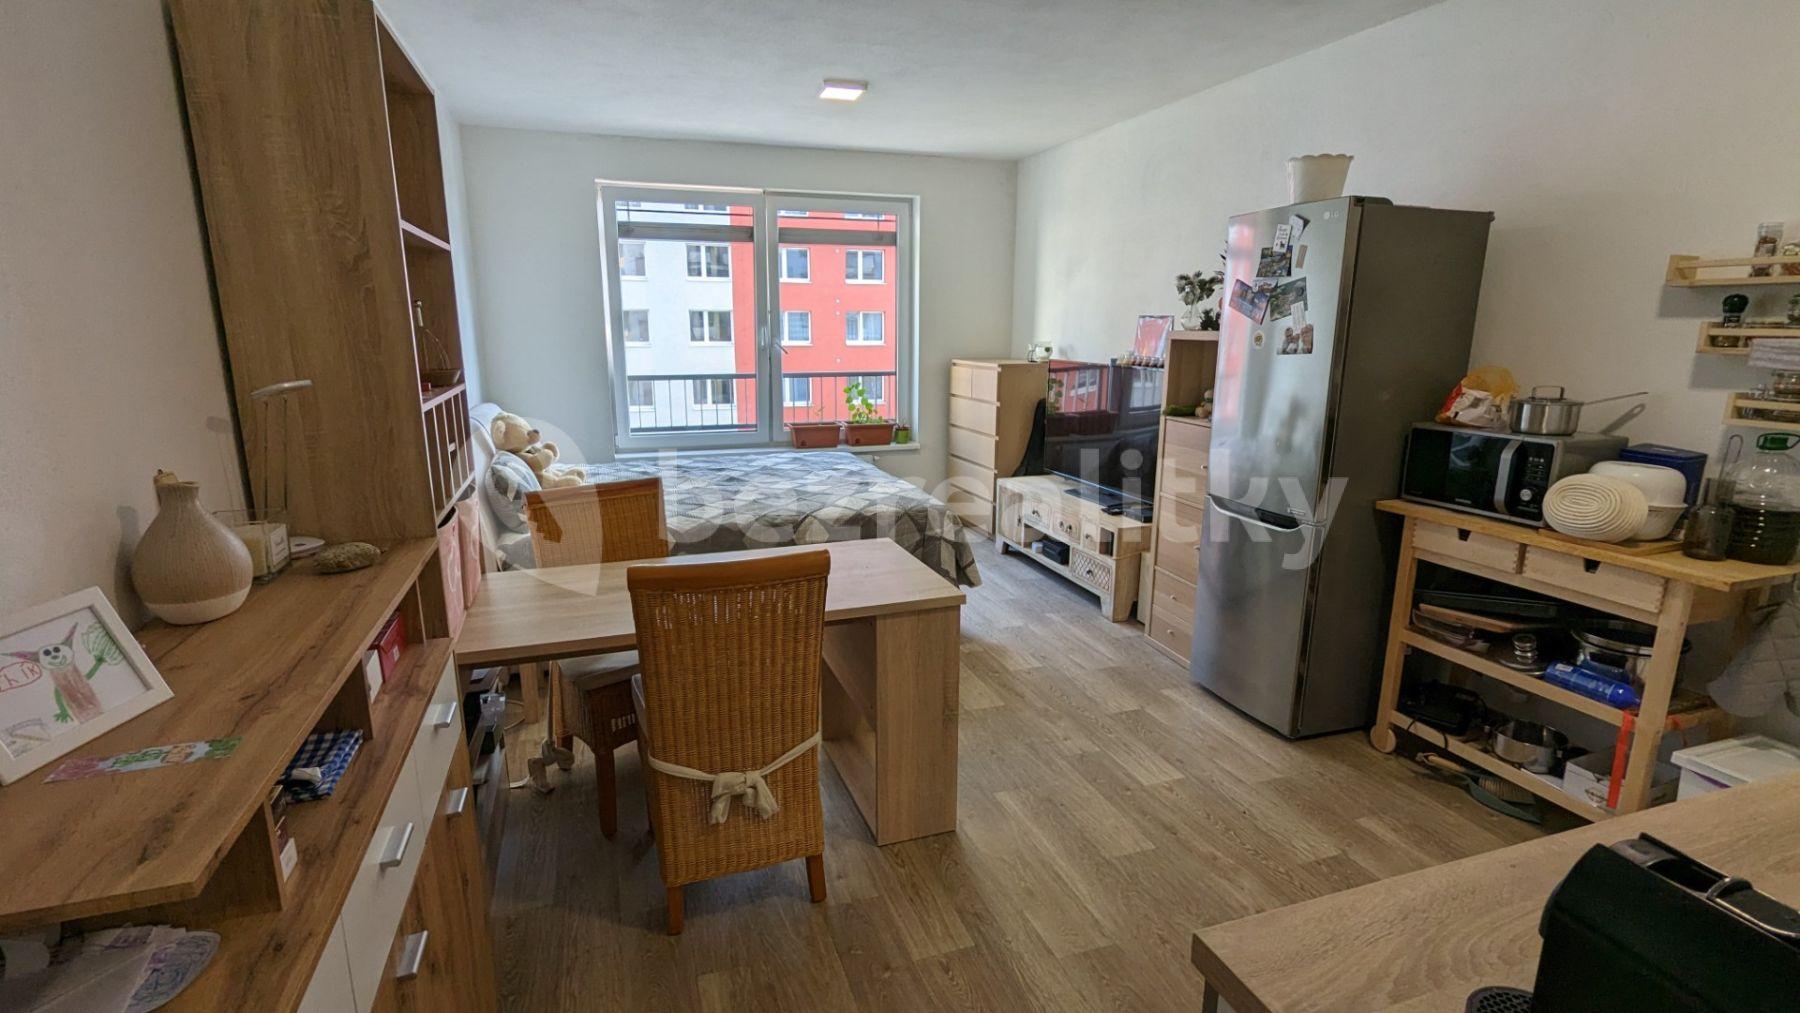 Studio flat to rent, 40 m², Turgeněvova, Brno, Jihomoravský Region